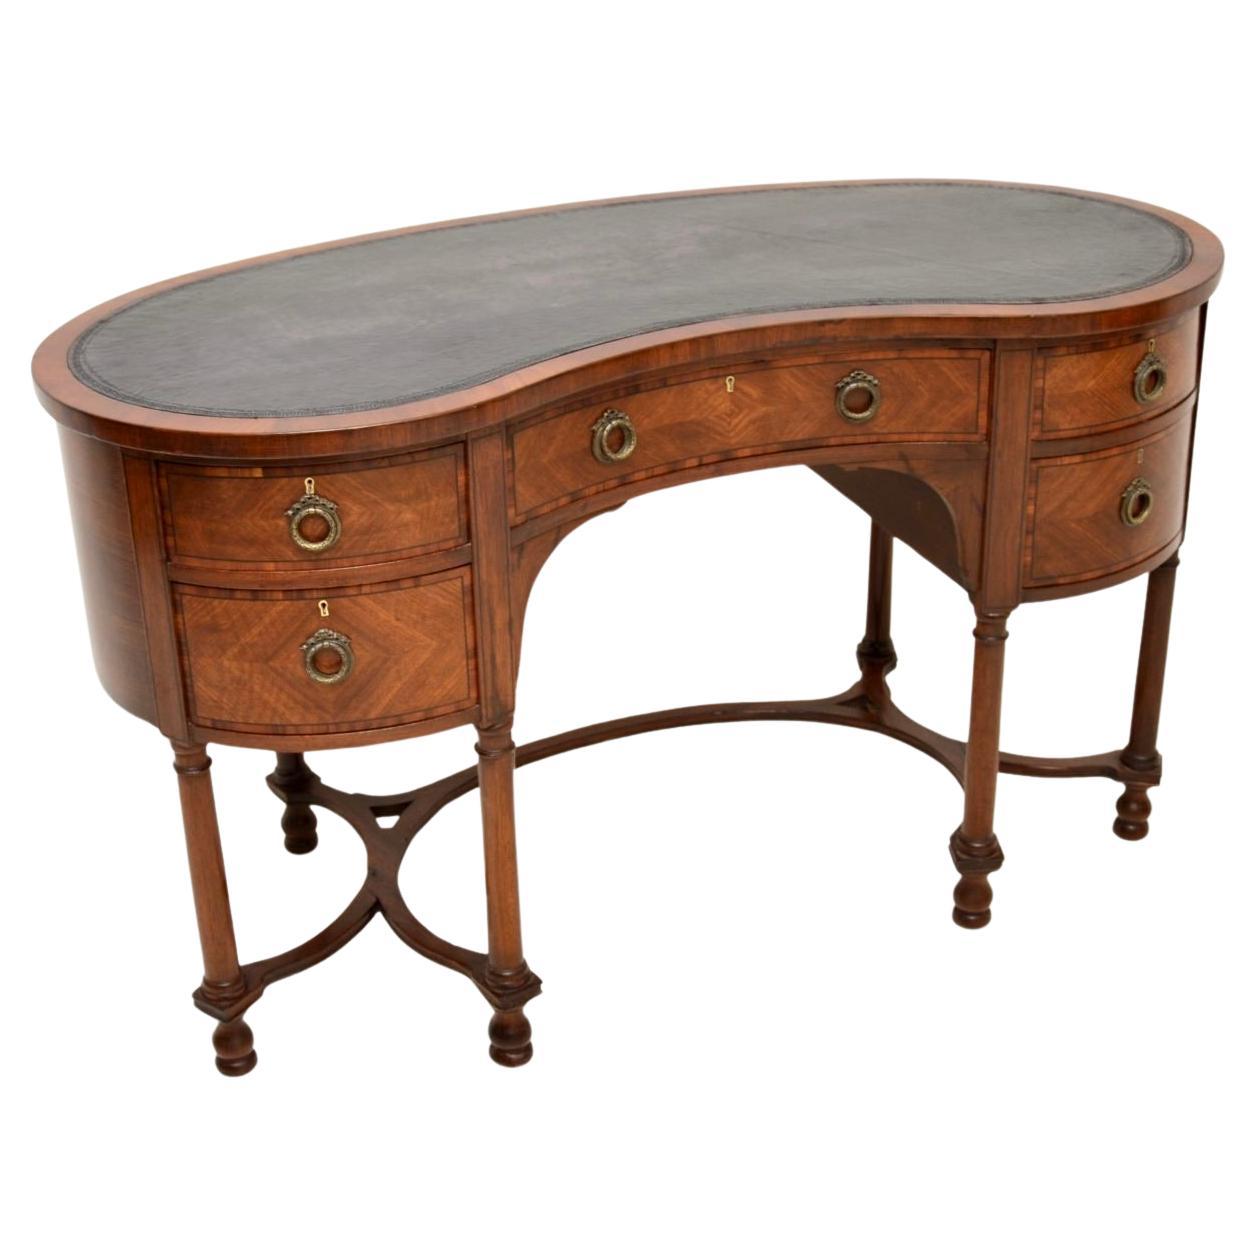 Antique Georgian Style Kidney Shaped Desk